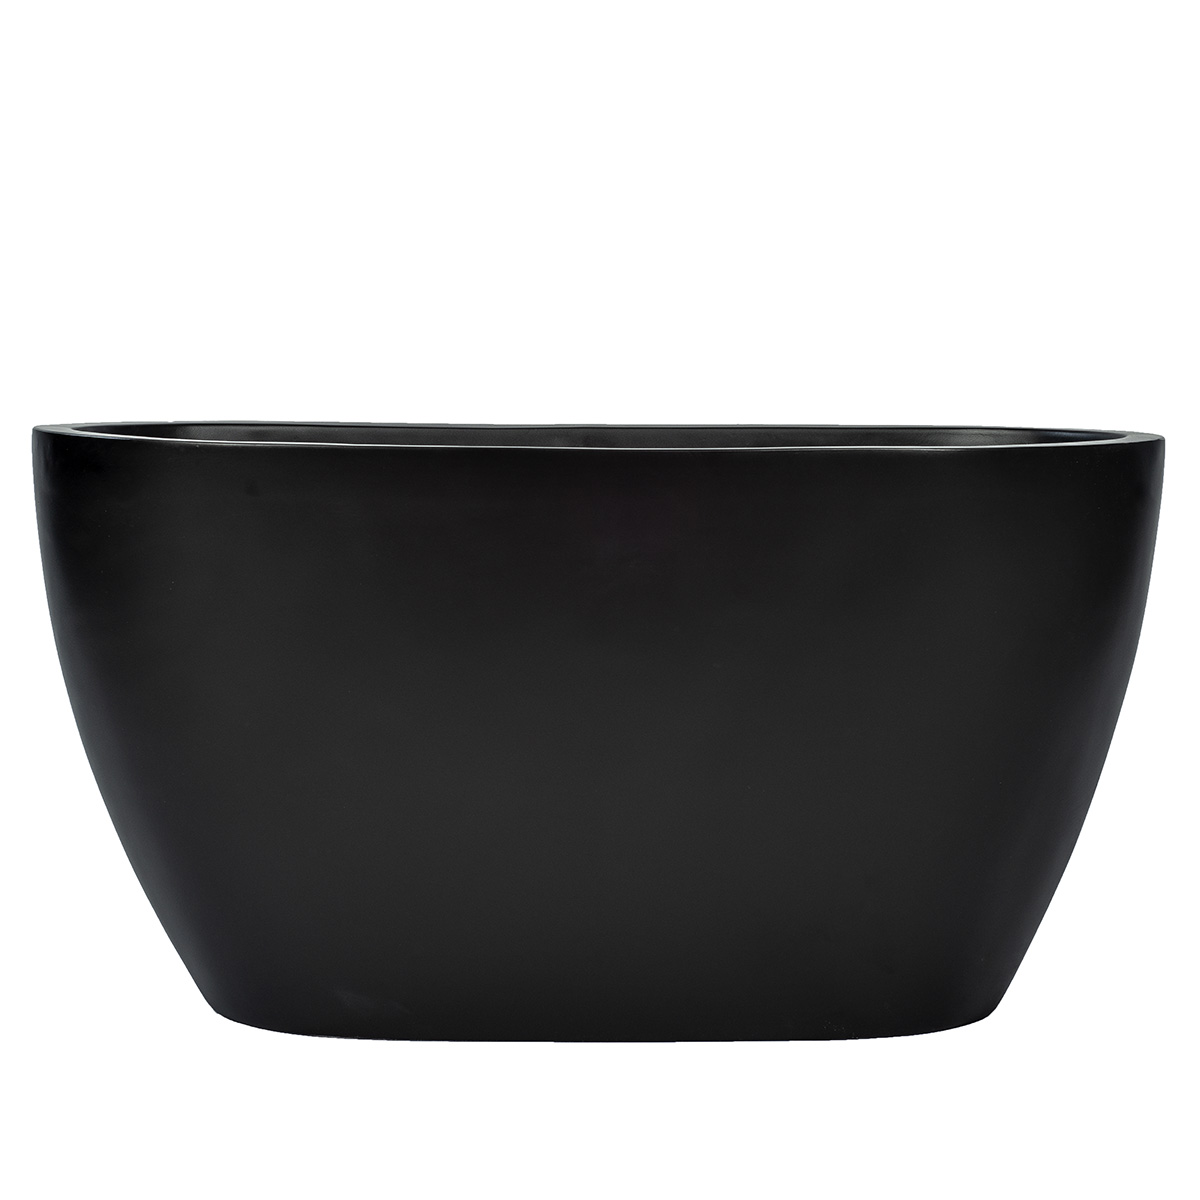 Oval-bowl-black-1200px